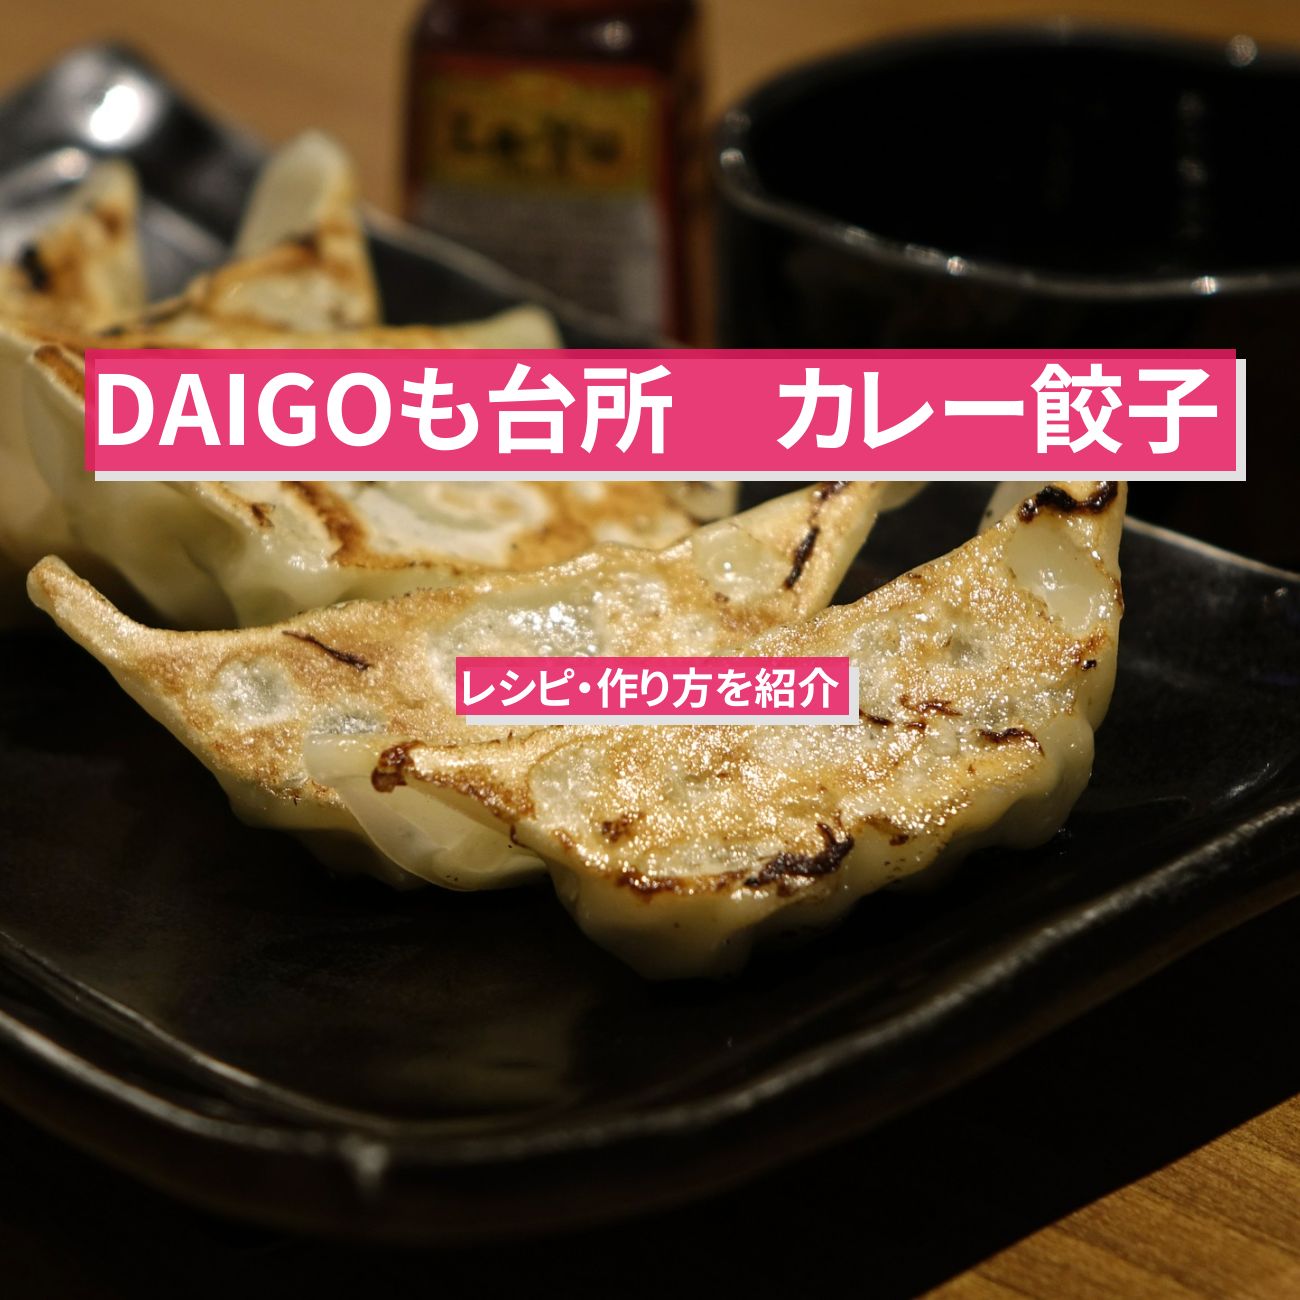 【DAIGOも台所】『カレー餃子』のレシピ・作り方を紹介〔ダイゴも台所〕